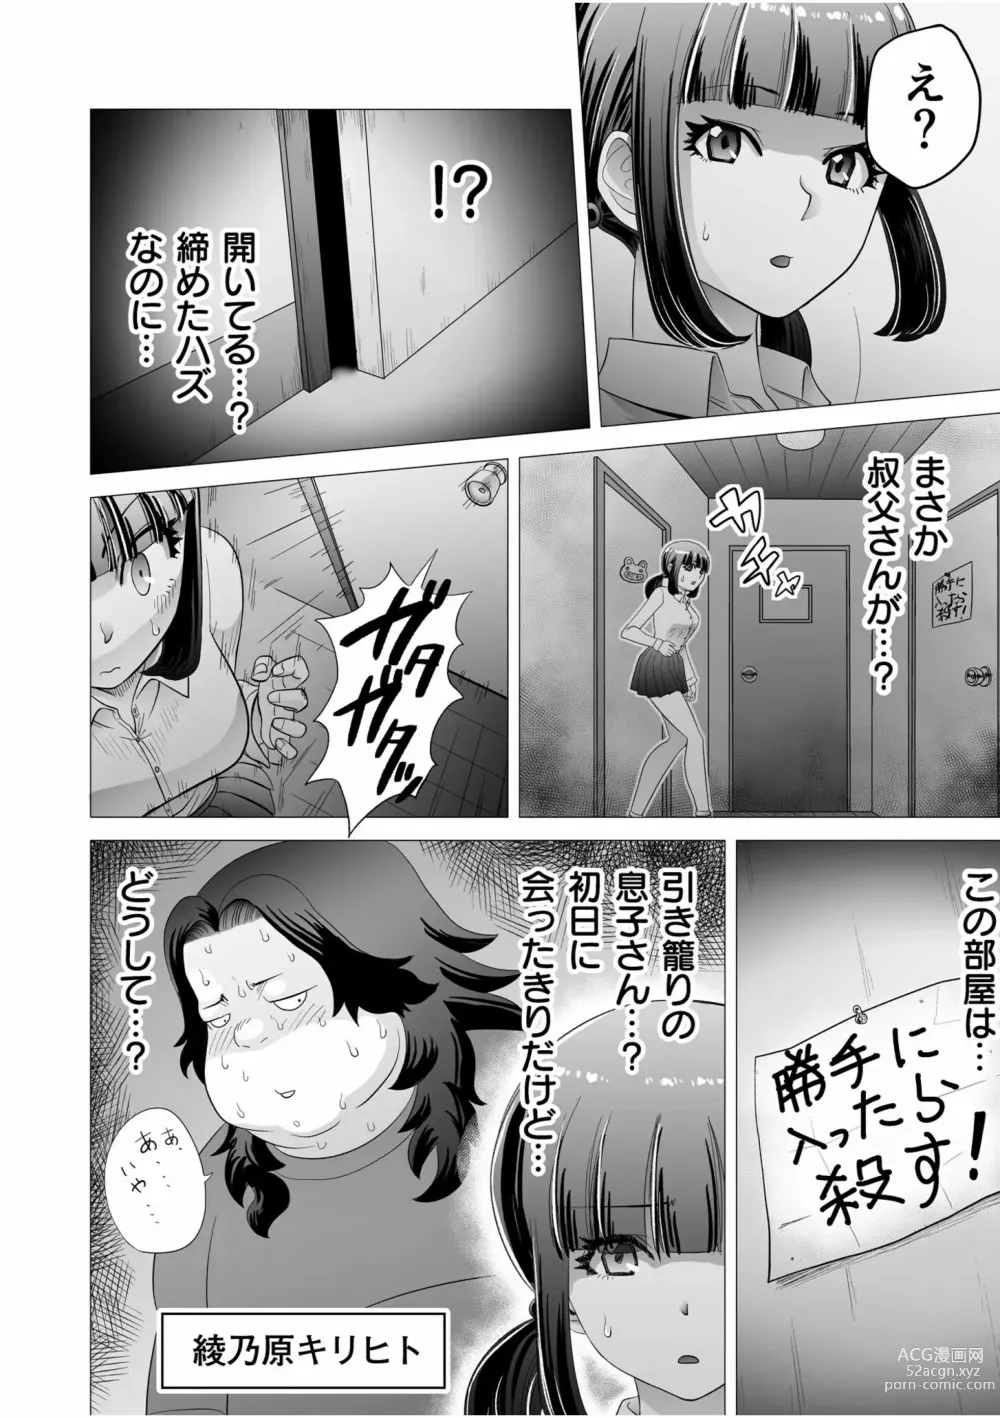 Page 6 of manga Shimai no Kyousei - sisters loud voice